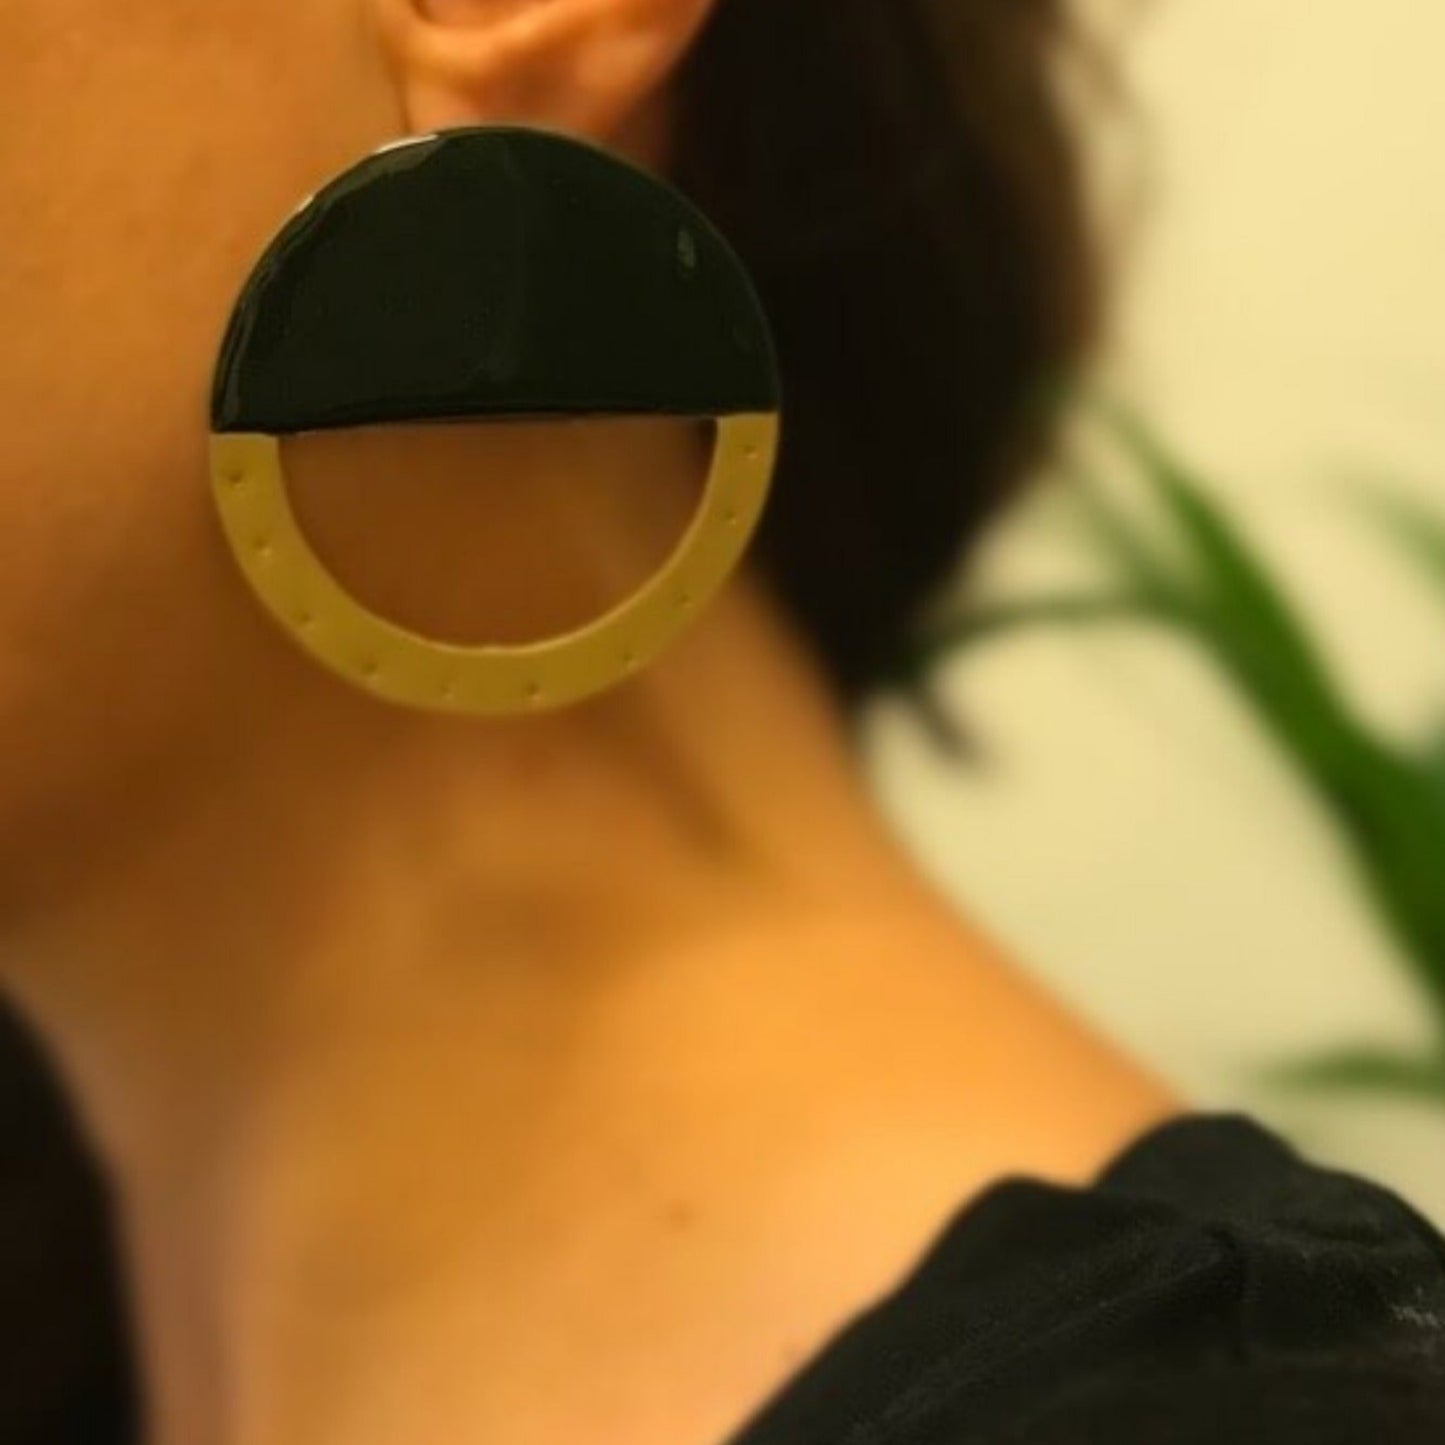 Brass earrings with resin | Apres - Midi Earrings - CURIUDO